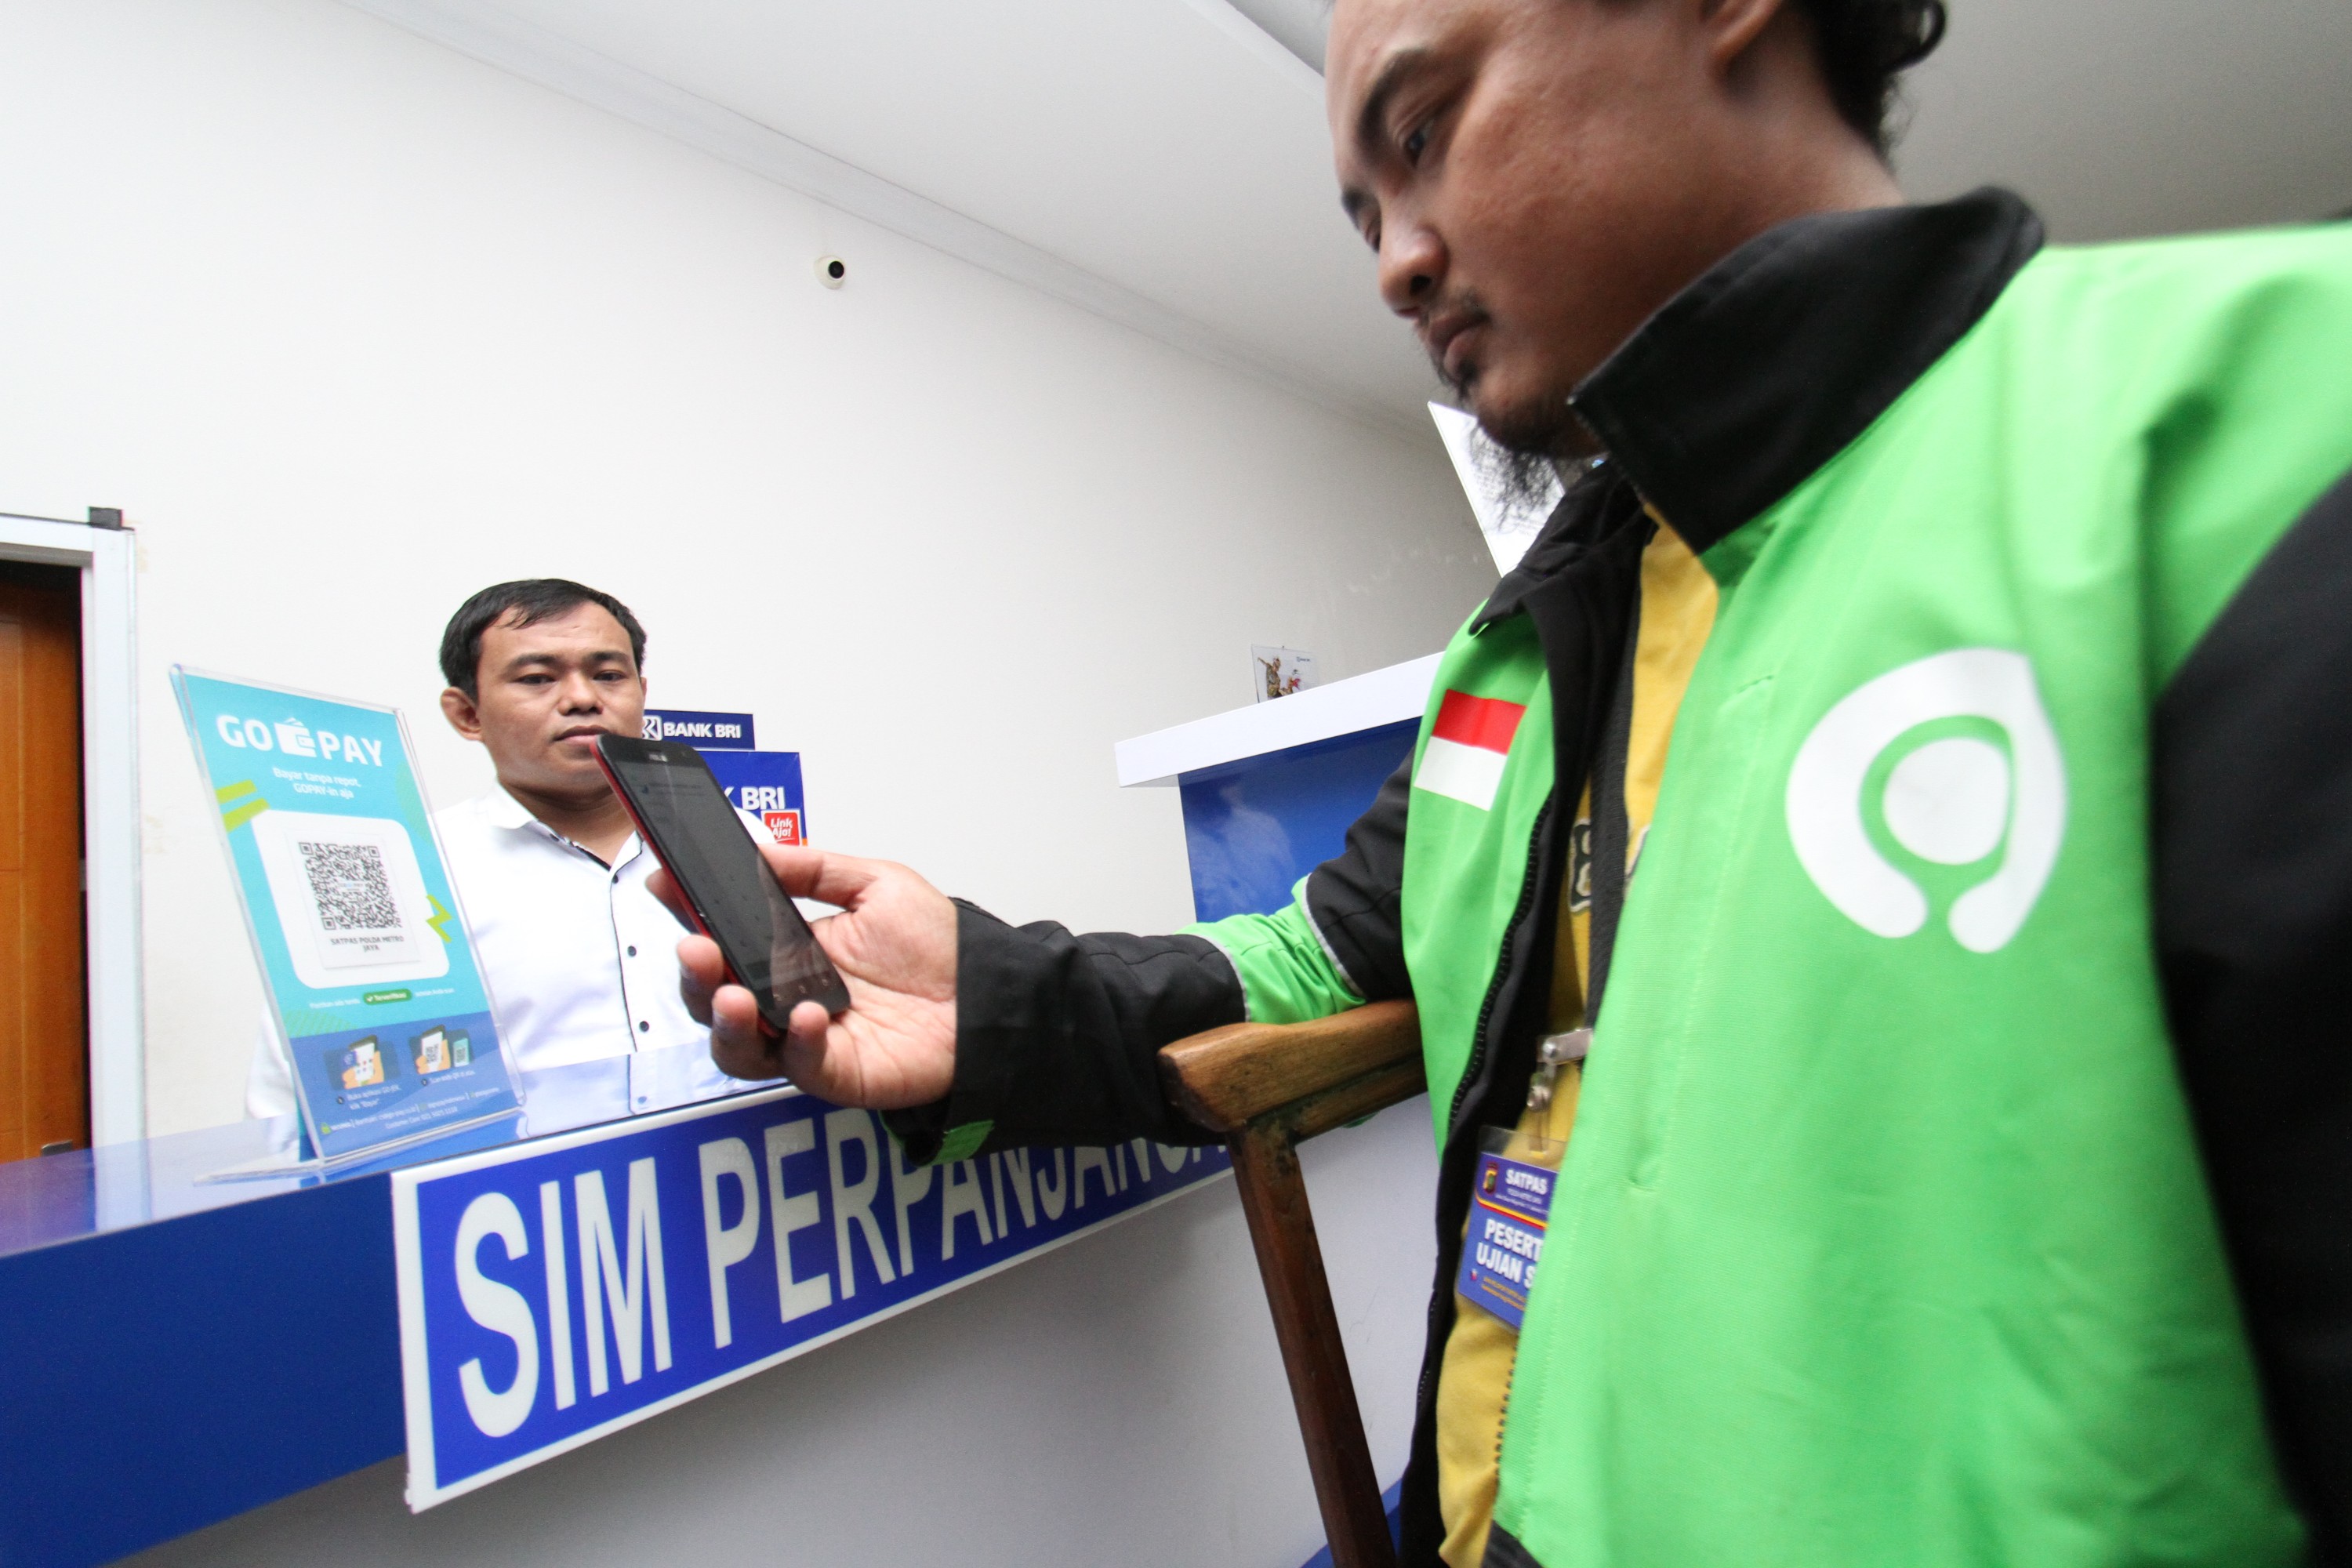 Polda Metro Jaya menggandeng GoPay sebagai mitra pembayaran non tunai untuk pembuatan dan perpanjangan SIM. Memperdalam penetrasi GoPay di layanan publik